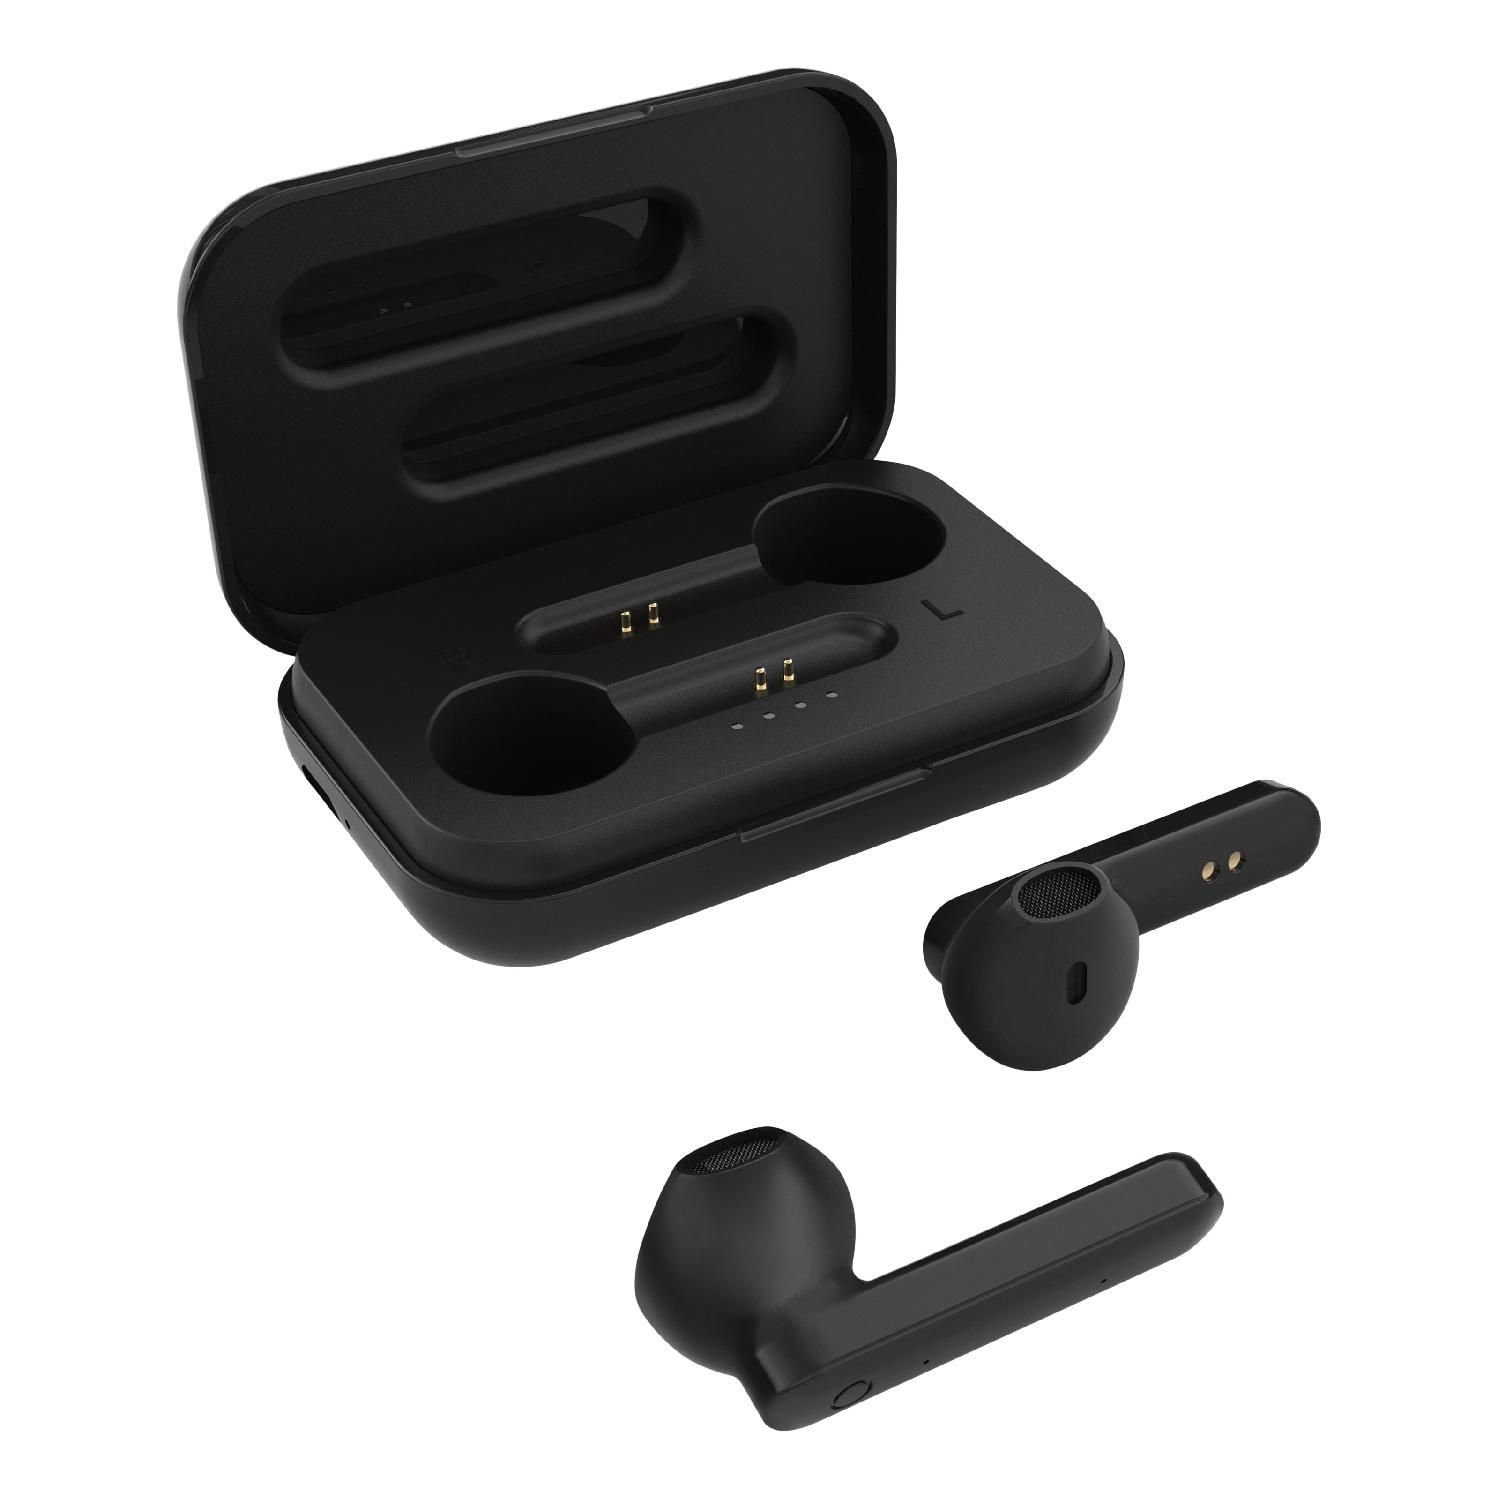 STREETZ TWS-104 Bluetooth 5 Kabellos Semi-In-Ear Kopfhörer inkl. Mikrofon, Jahre (integriertes Touchcontrol Kopfhörer Herstellergarantie)